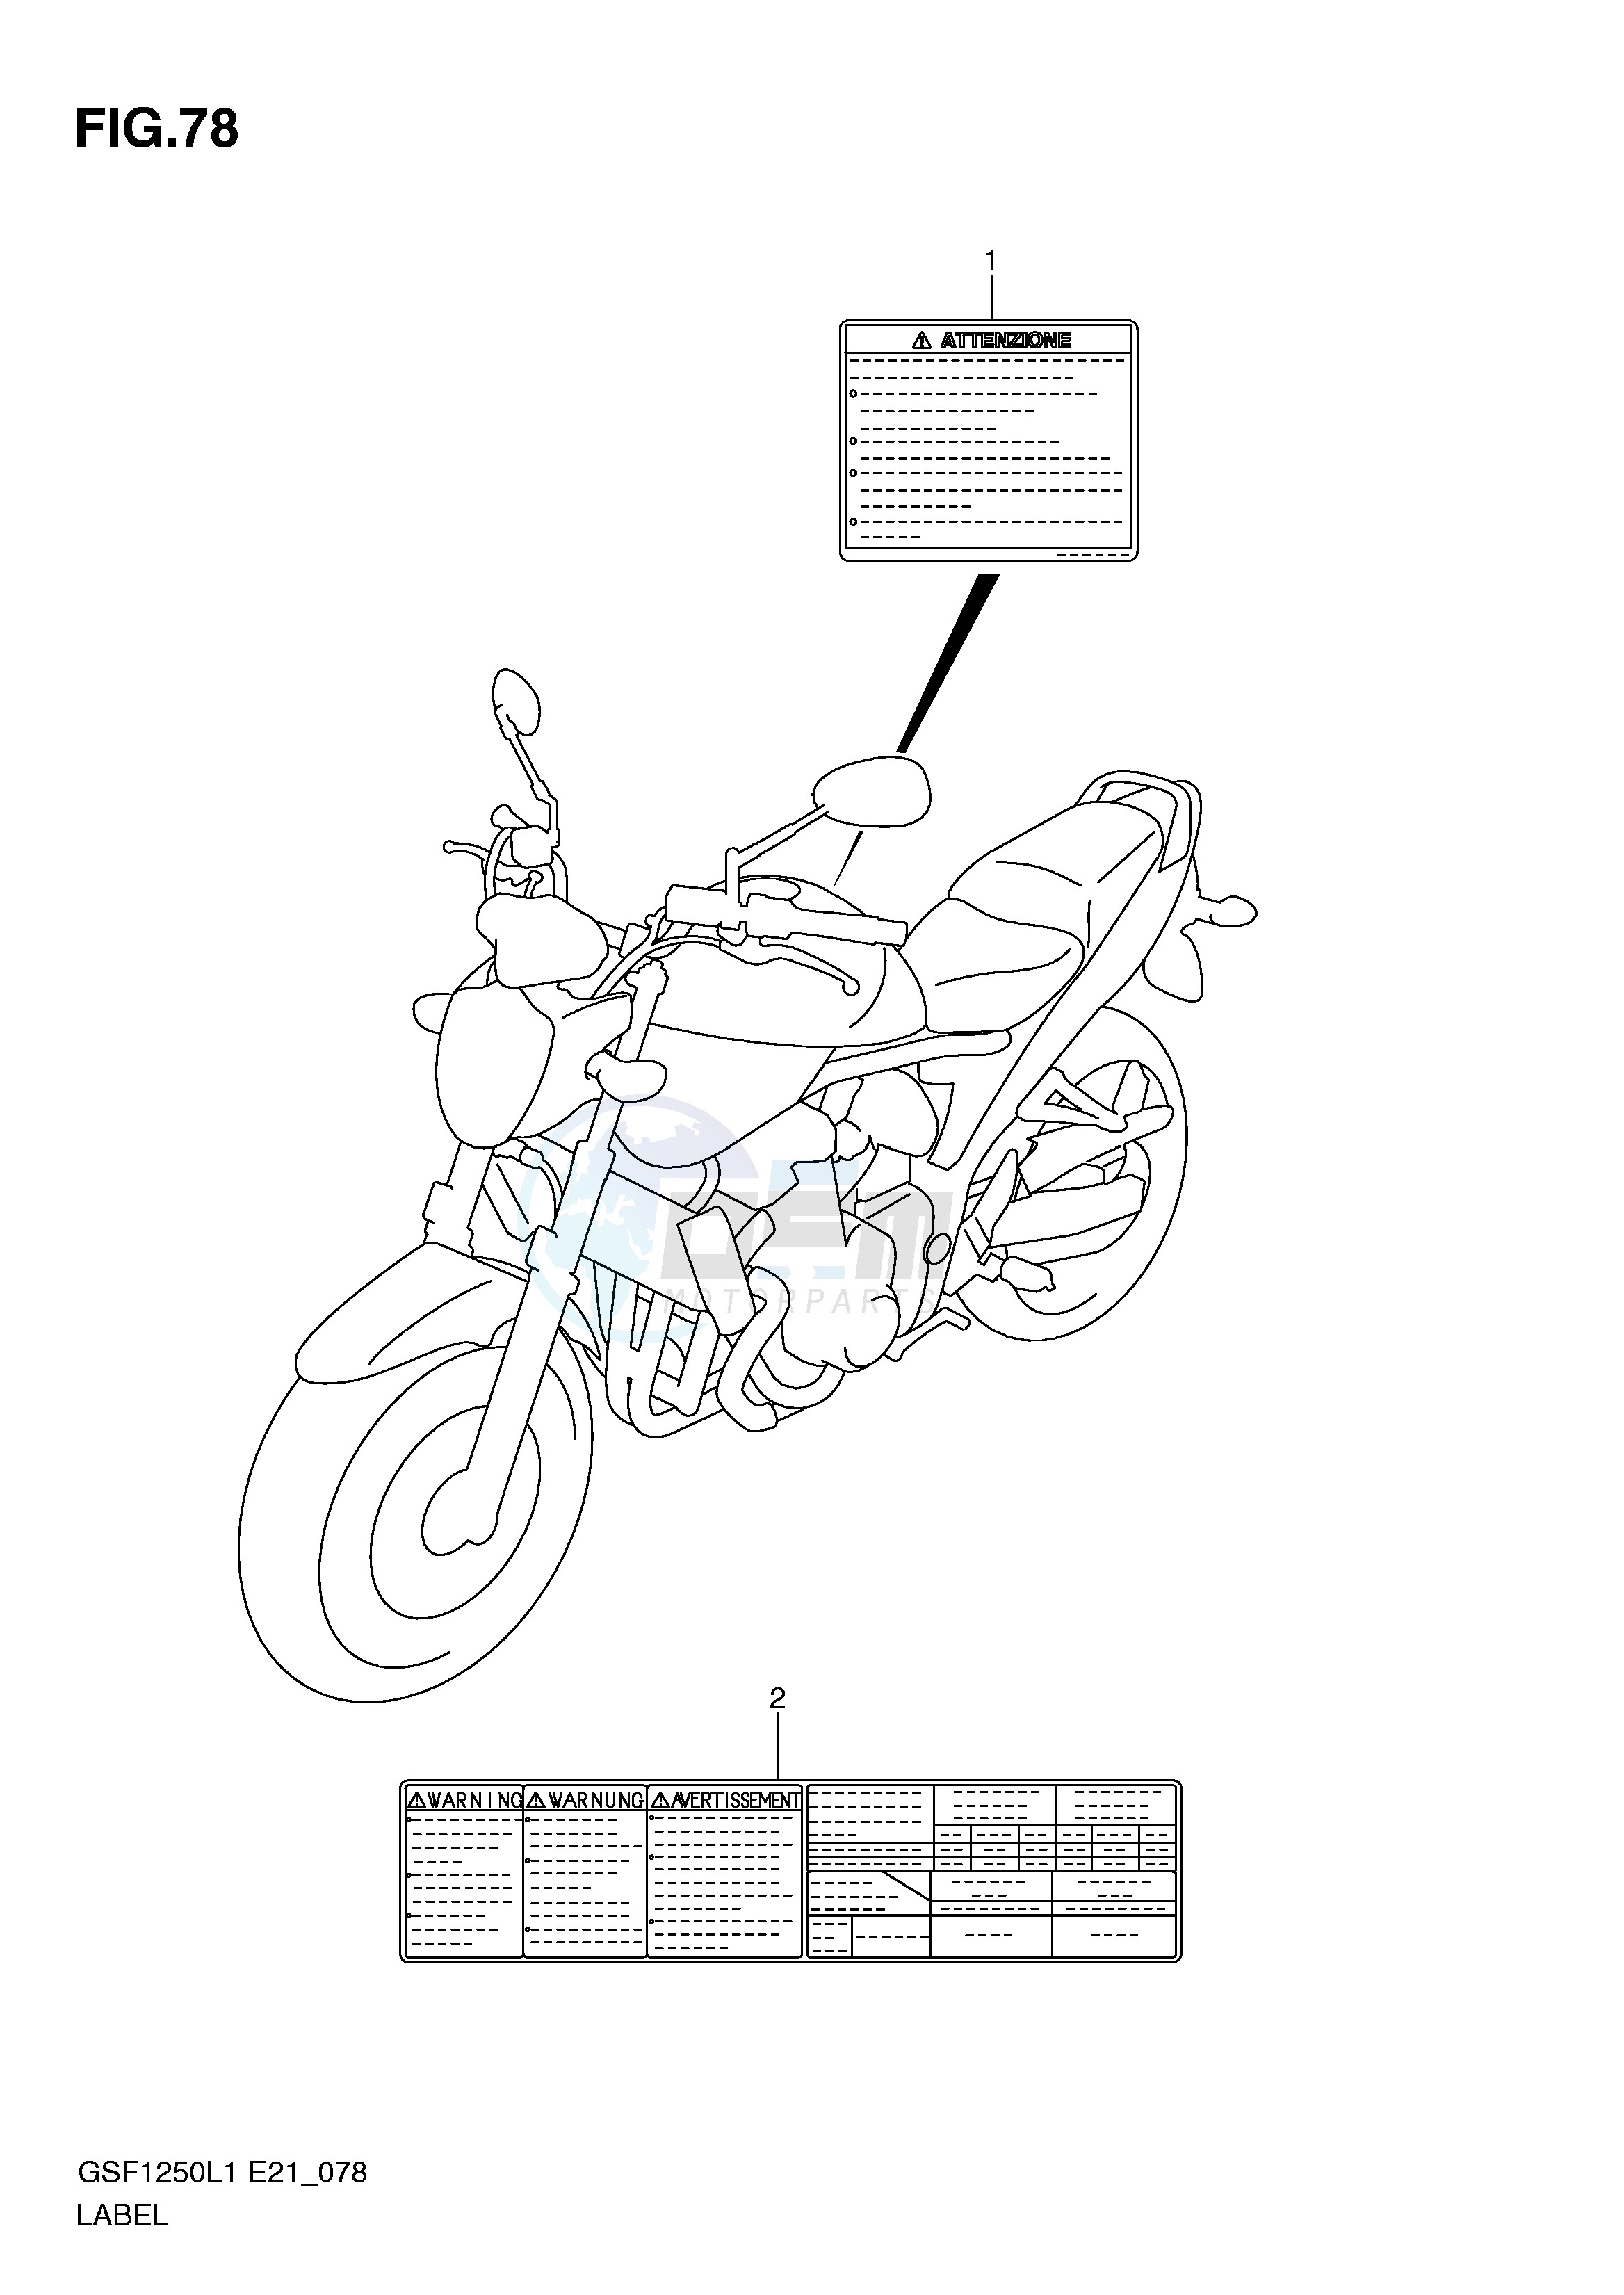 LABEL (GSF1250AL1 E24) blueprint